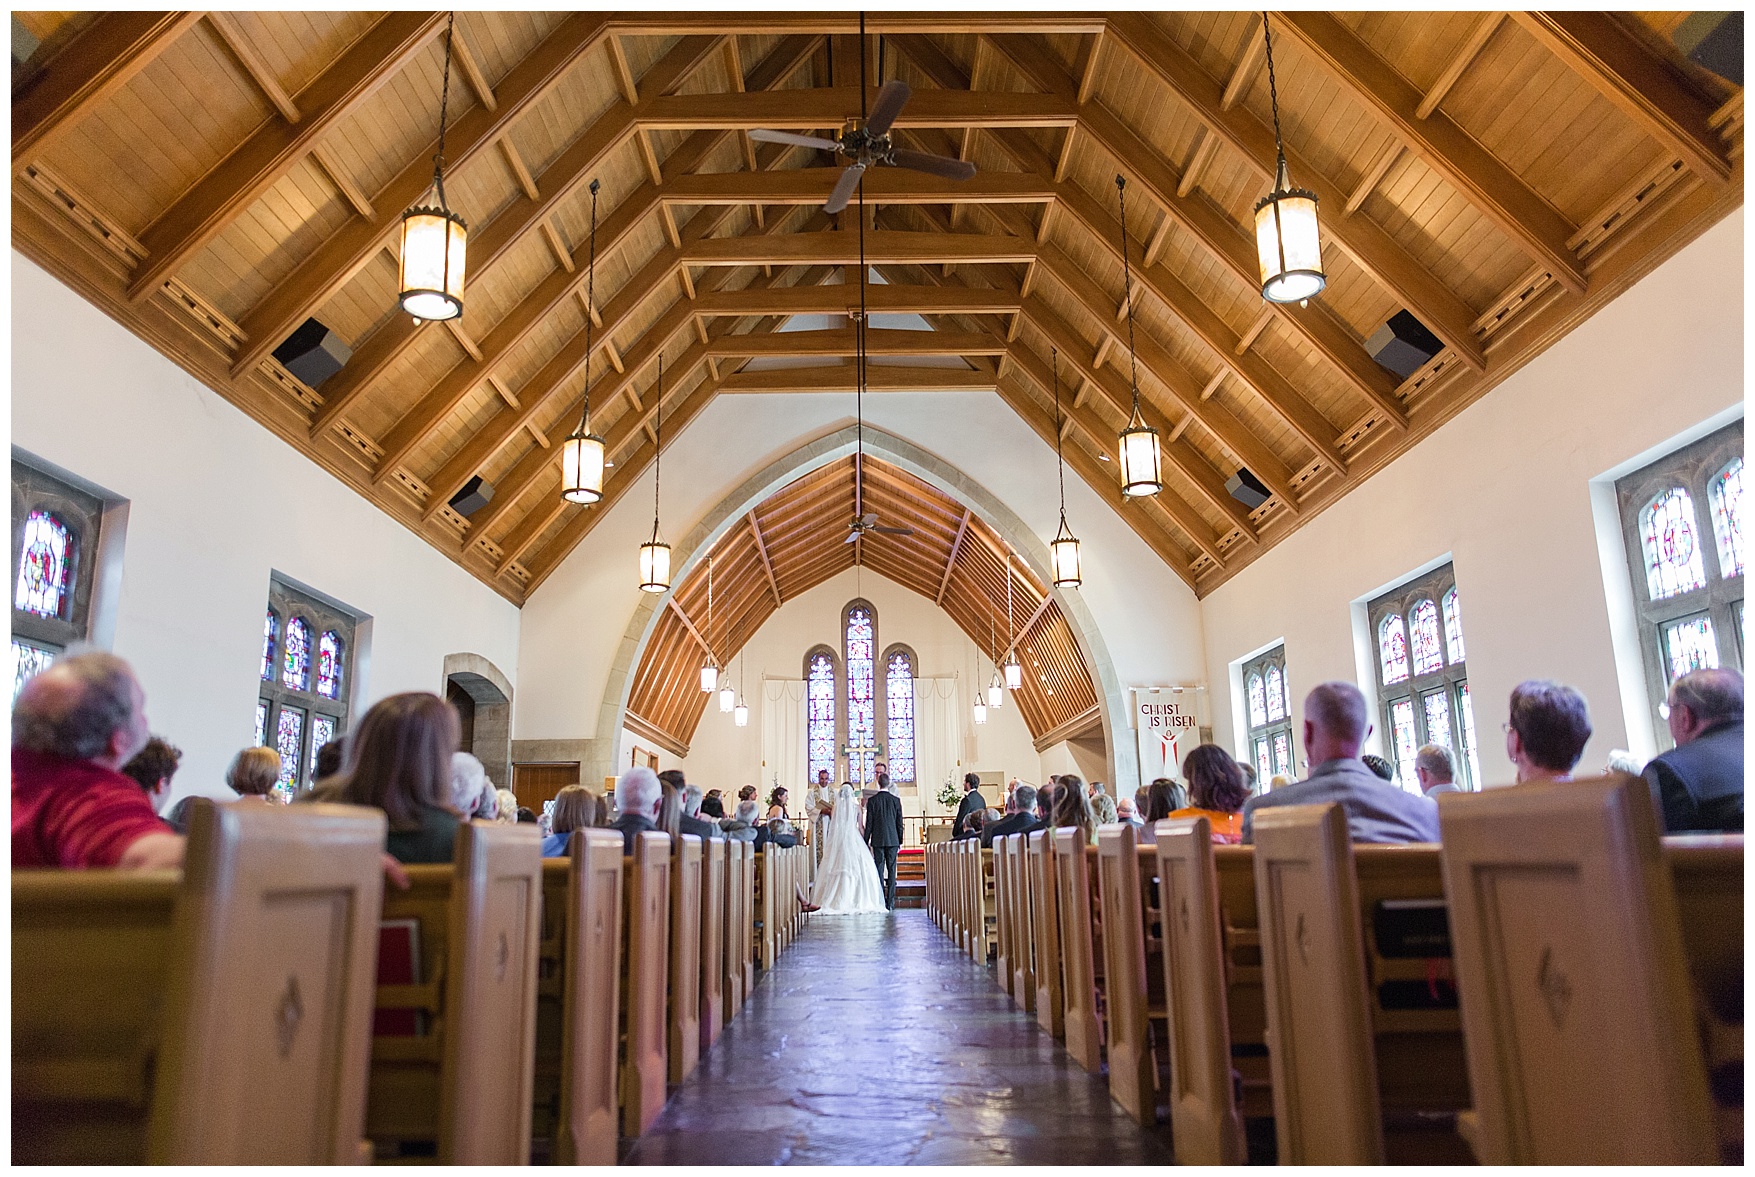 Roanoke, Virginia church wedding || Christ Lutheran Church in Roanoke || Wedding at The Braeloch on Glenburn Farms